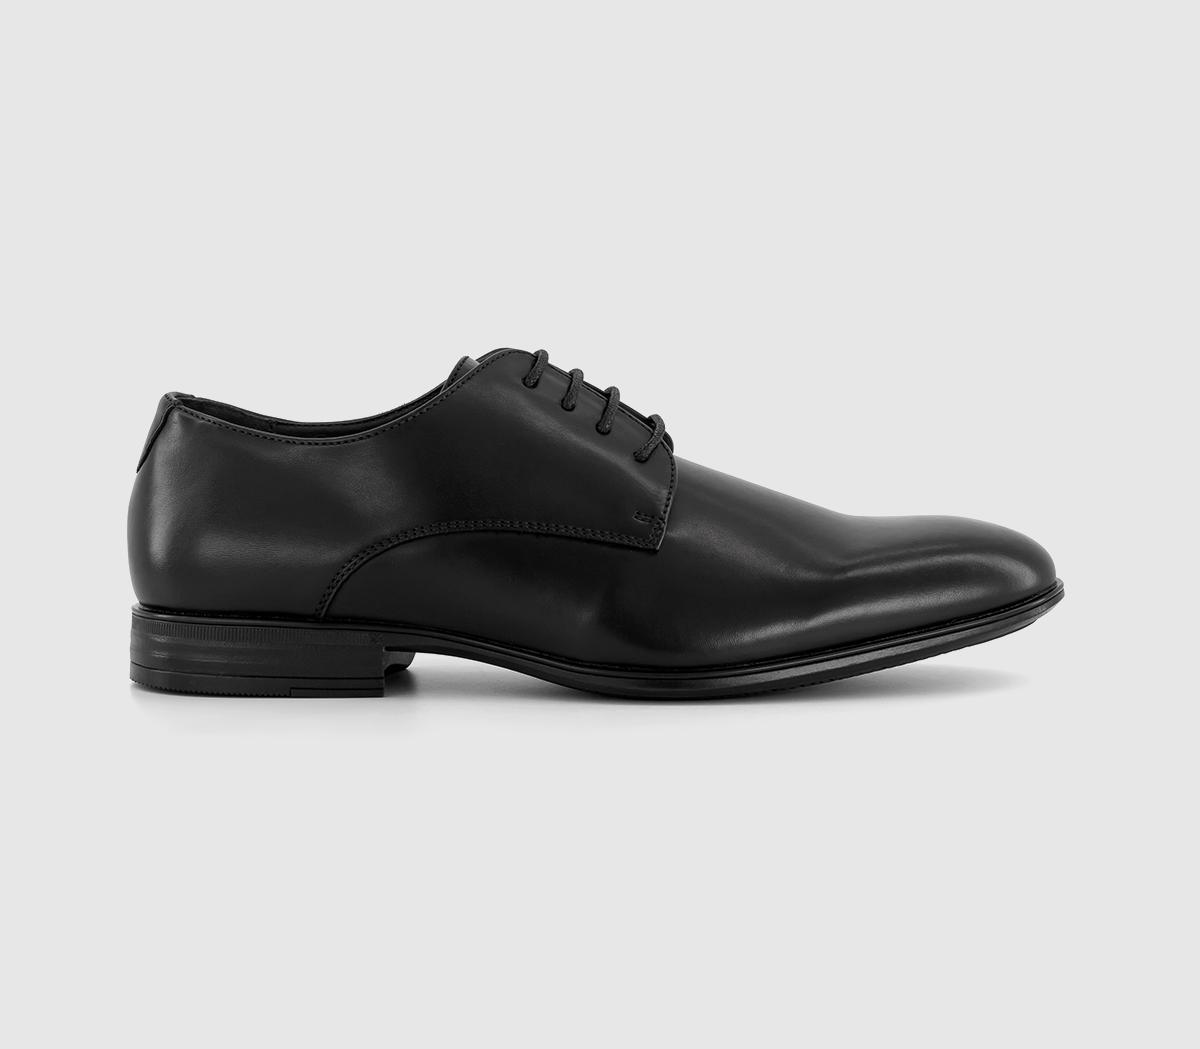 OFFICE Mansel 4 Eye Derby Shoes Black - Men’s Smart Shoes